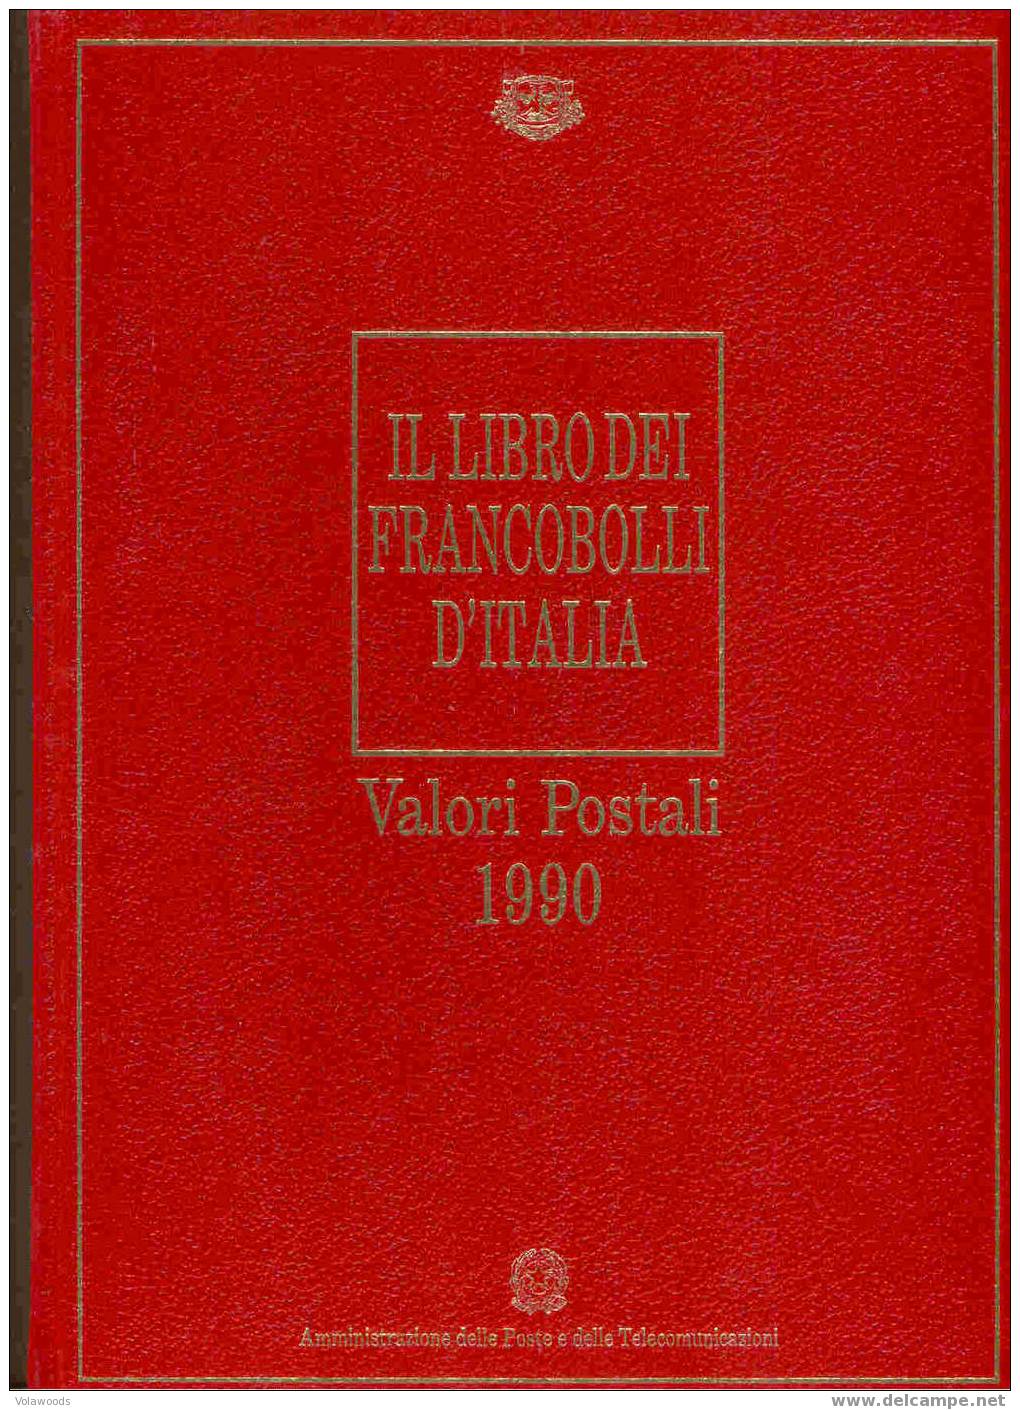 Italia - Libro Dei Francobolli 1990 - Annata Completa Francobolli/libretti/foglietti - Volledige Jaargang